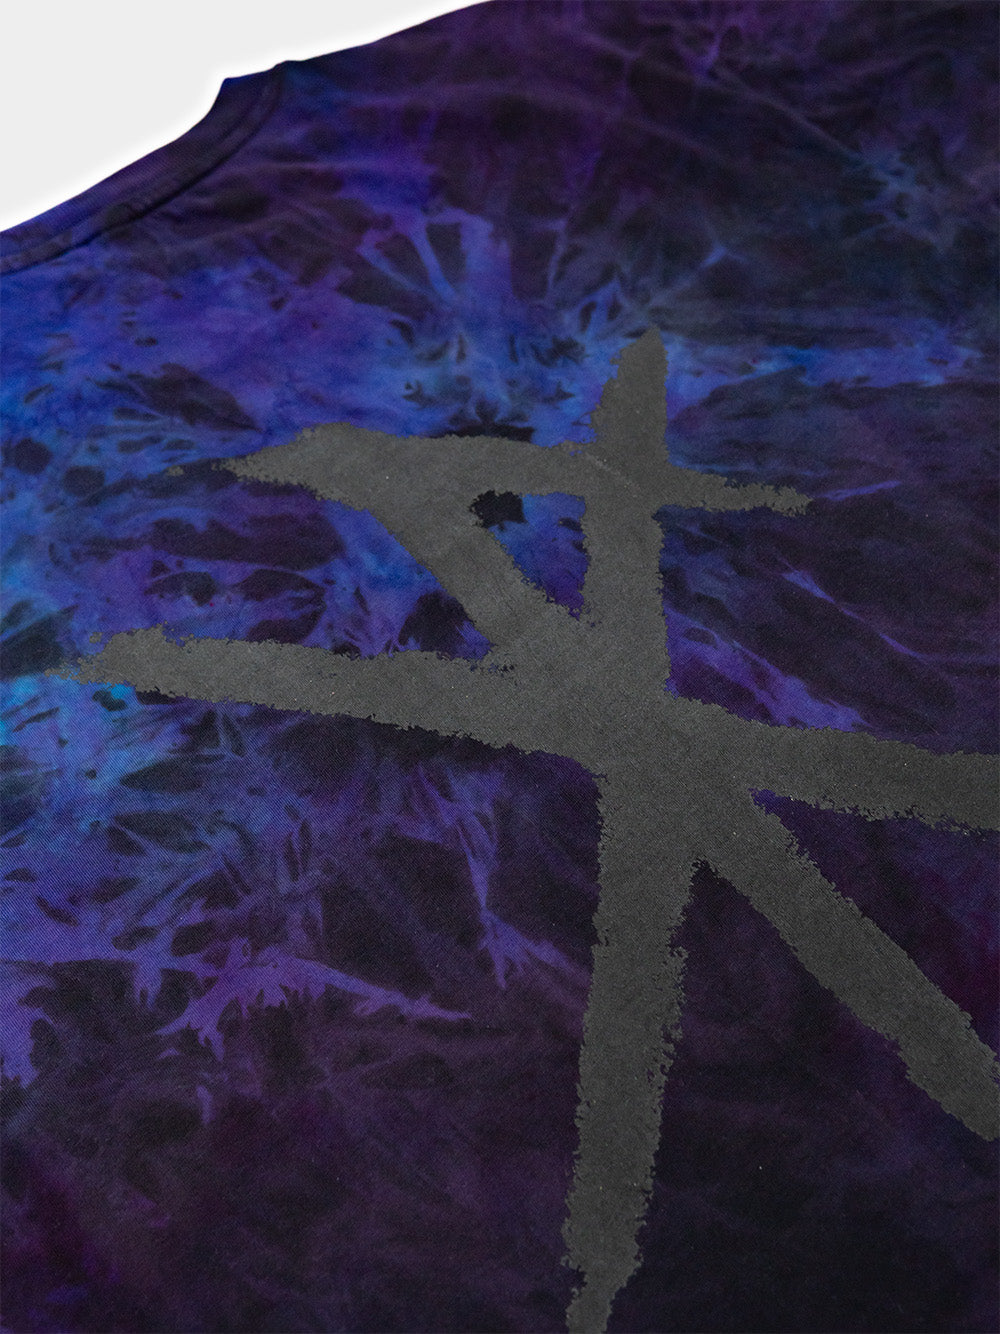 Pacify Constellation - T-Shirt